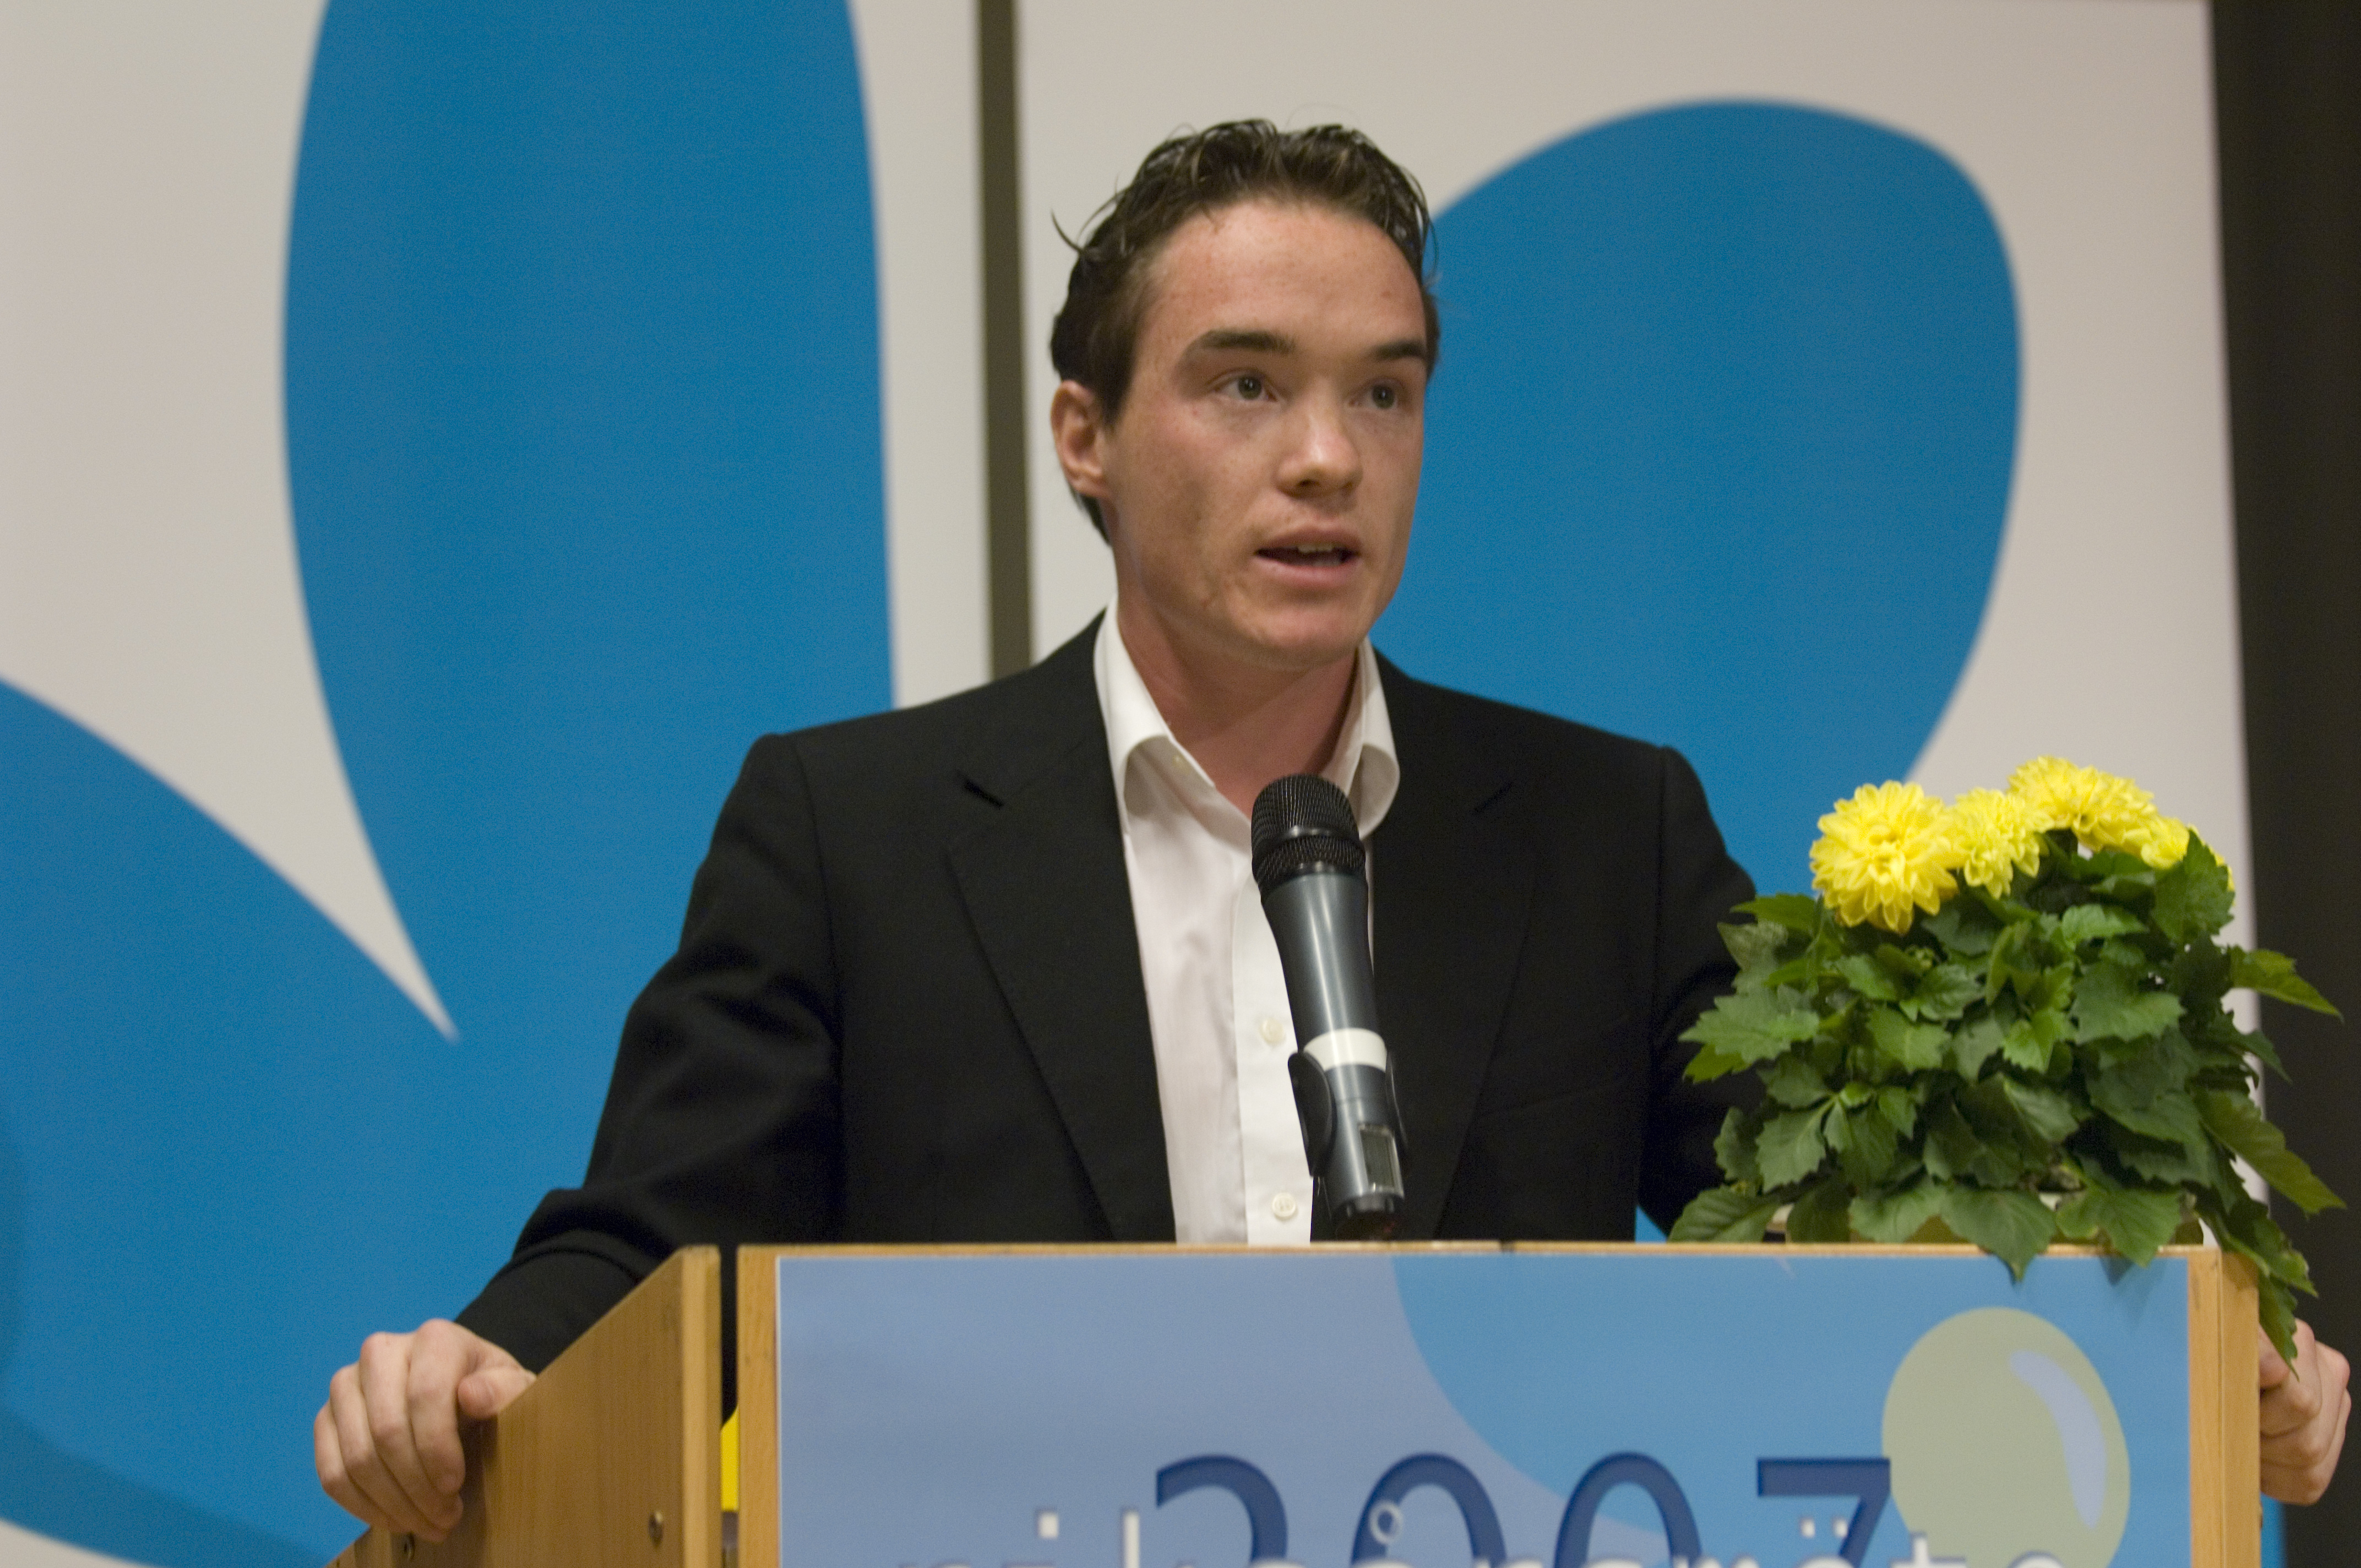 Riksdagsvalet 2010, Kent Ekeroth, SMS-duellen, Politik, Sverigedemokraterna